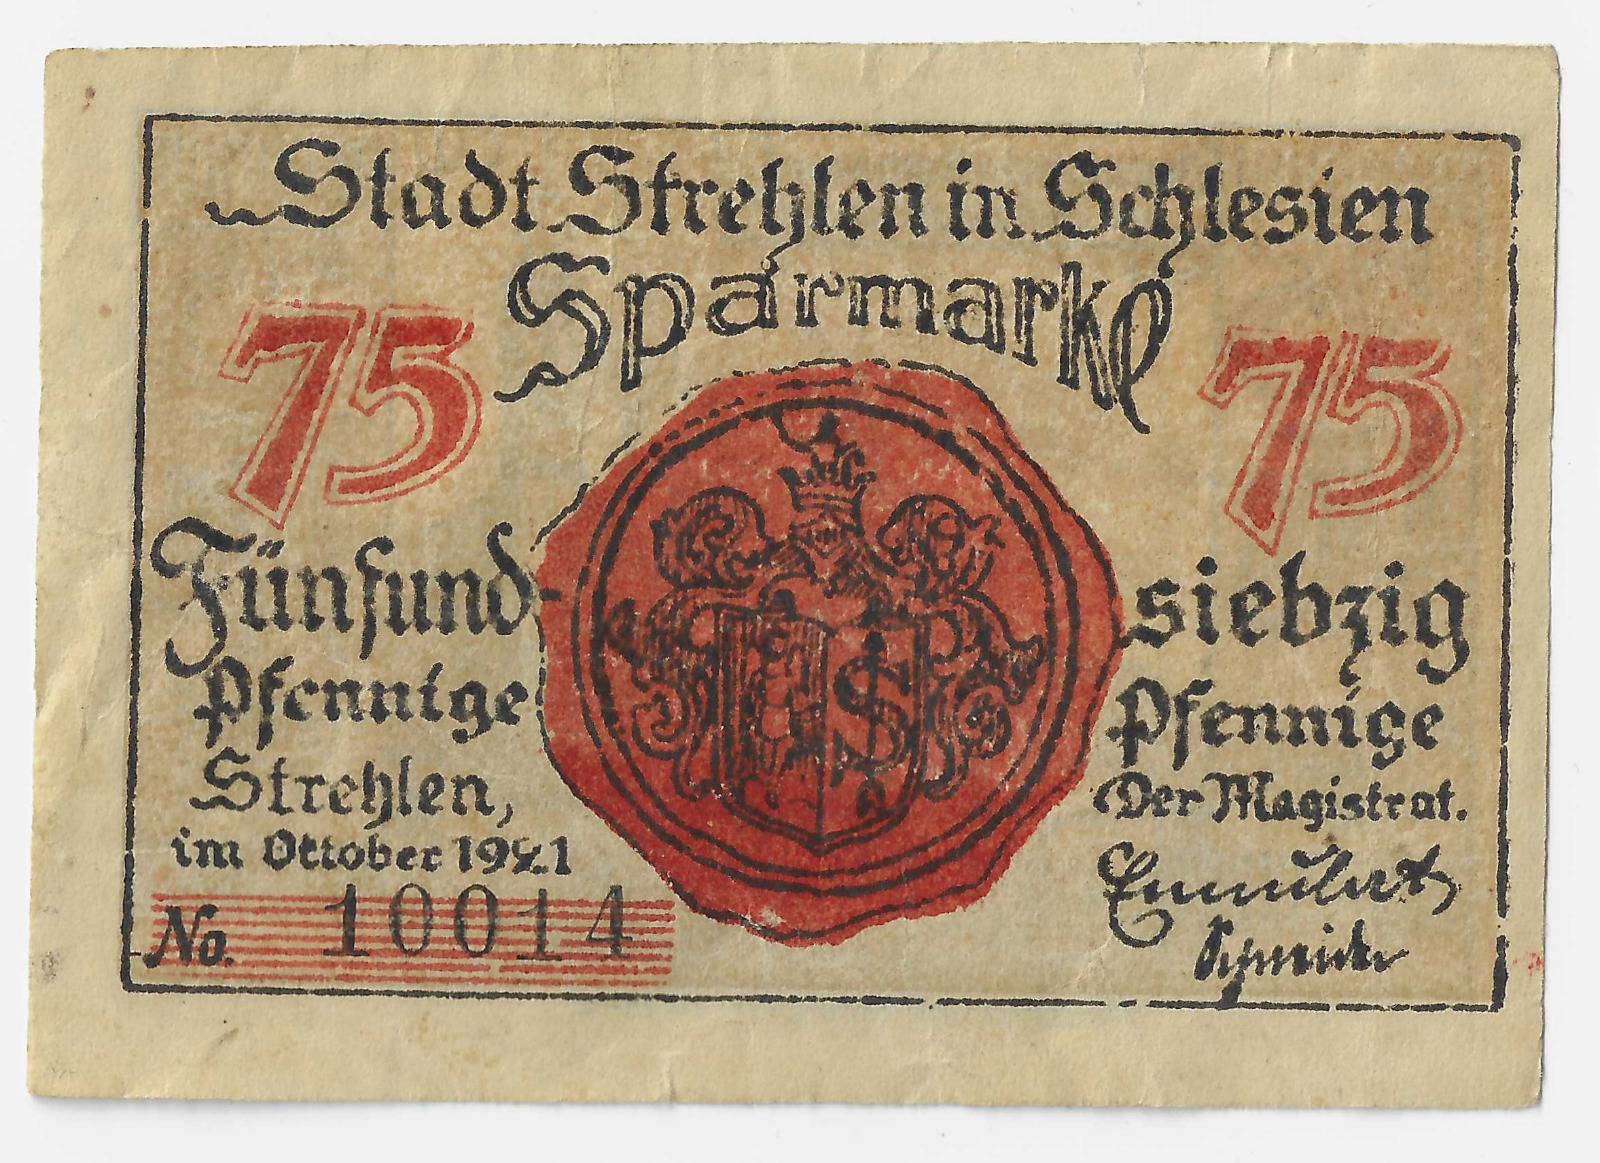 75 Pfennig - Strehlen, Poland - German Issue - October 1921 - Catholic Church